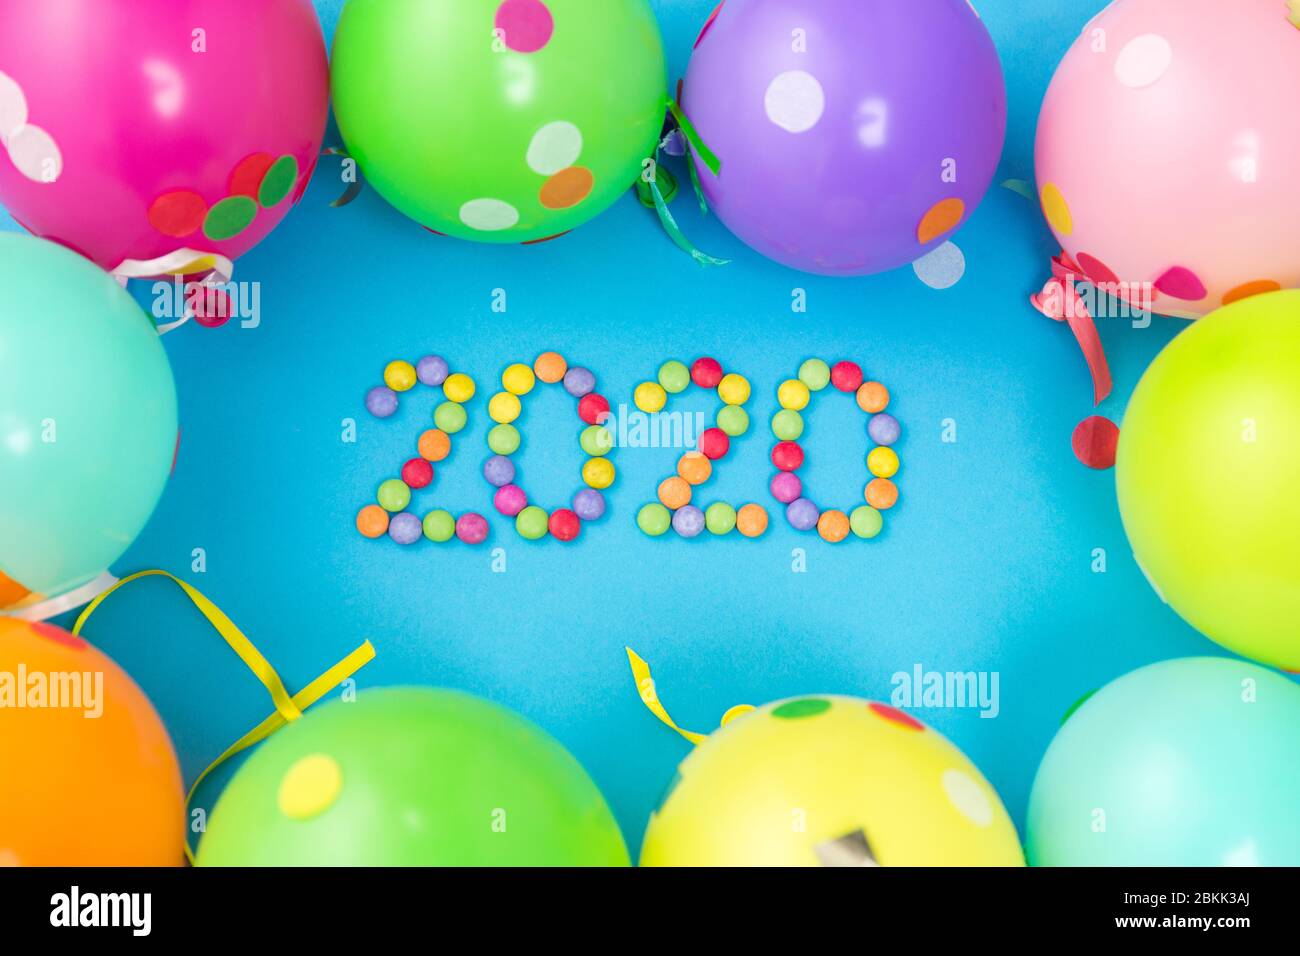 https://c8.alamy.com/comp/2BKK3AJ/new-year-2020-party-date-with-balloons-2BKK3AJ.jpg